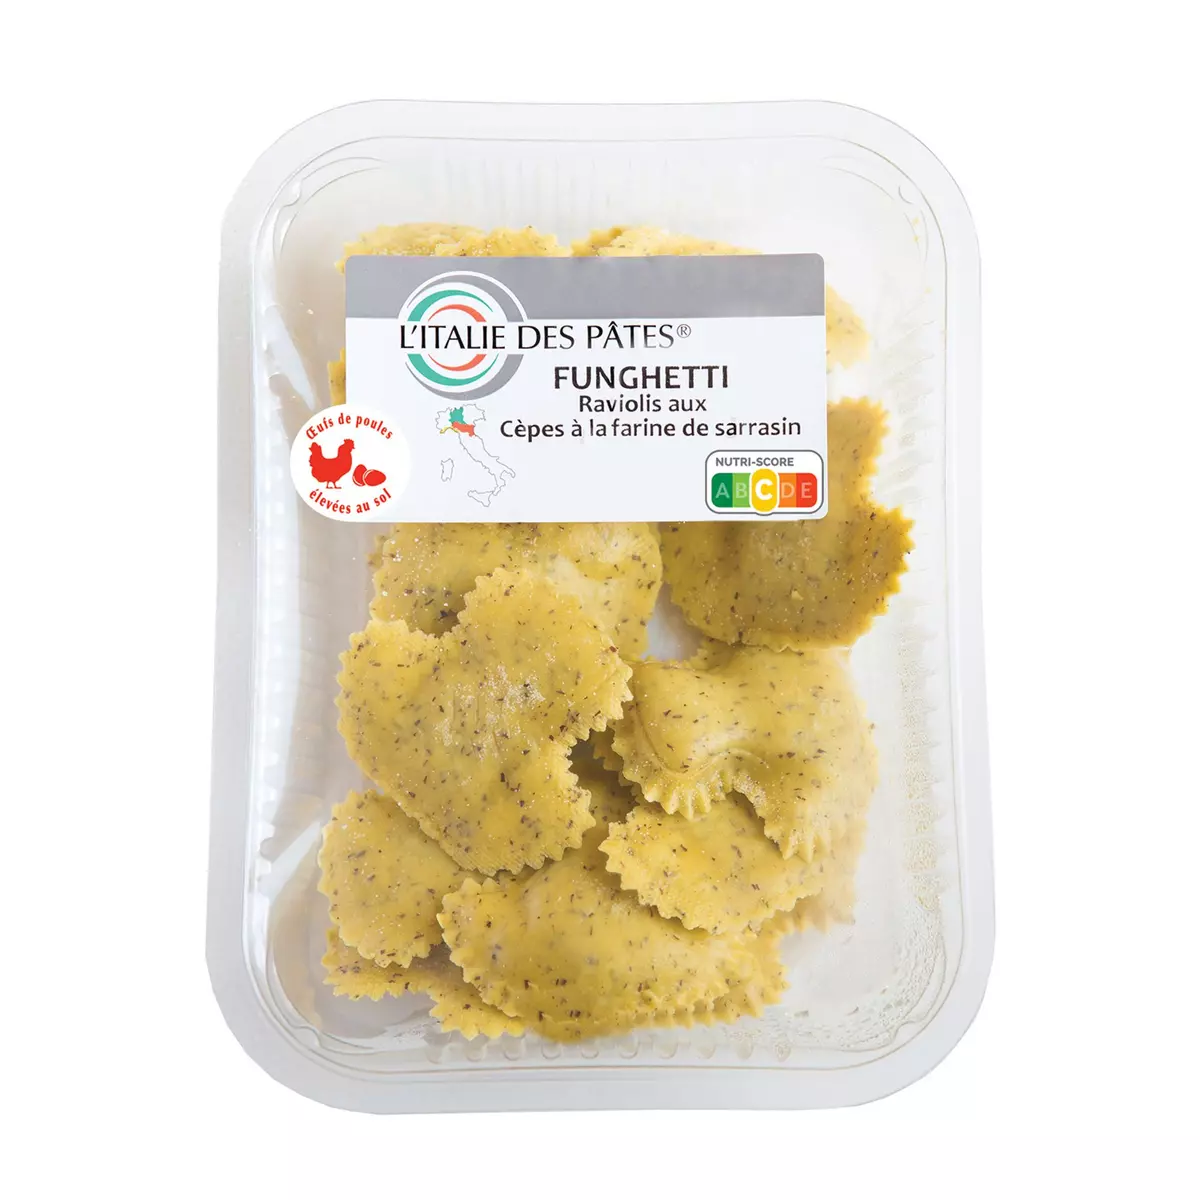 L'ITALIE DES PATES Funghetti raviolis aux cèpes à la farine de sarrazin 250g